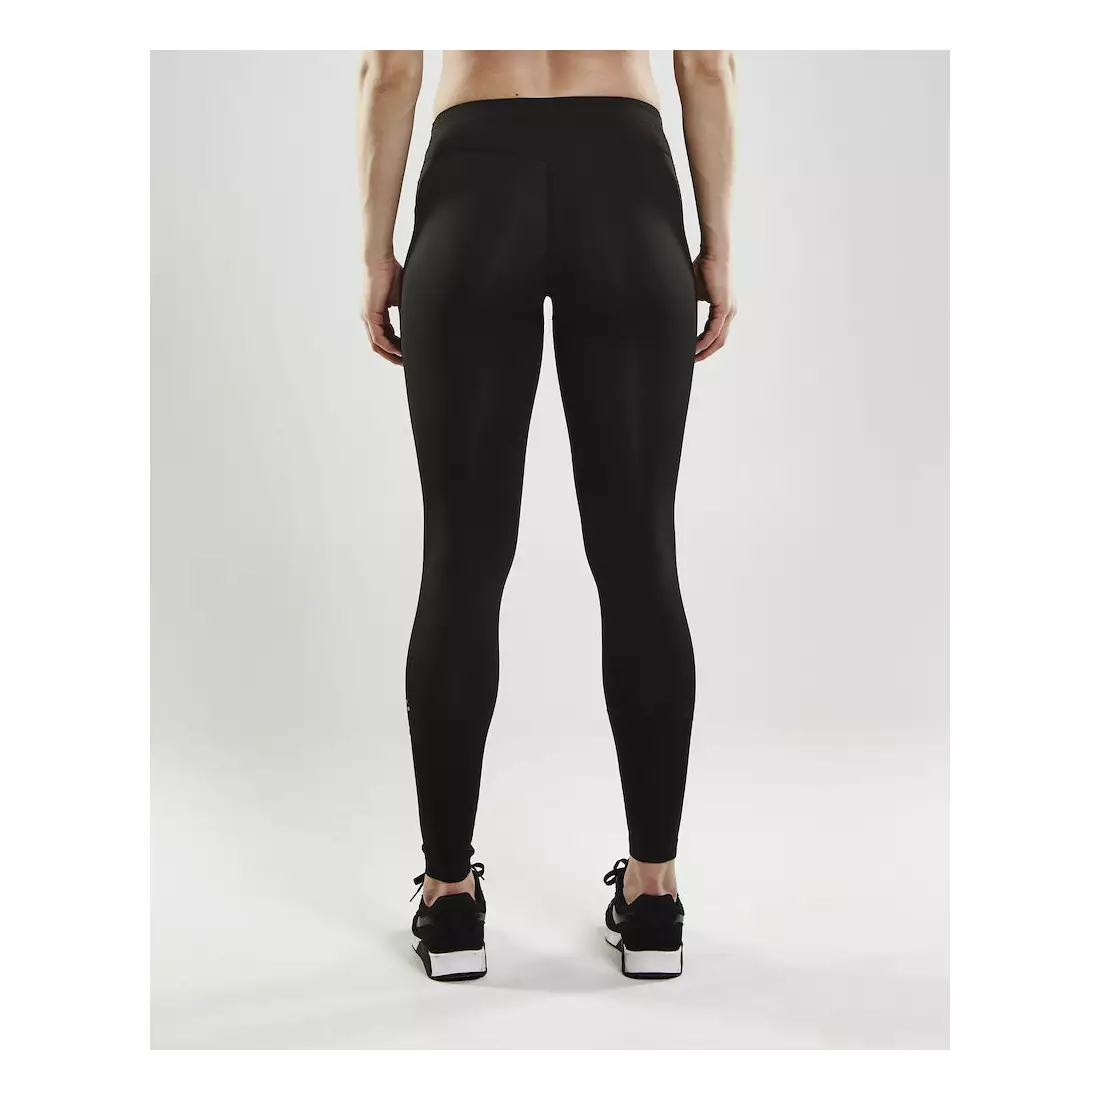  CRAFT women's running training pants EAZE Tights 1905881-999000